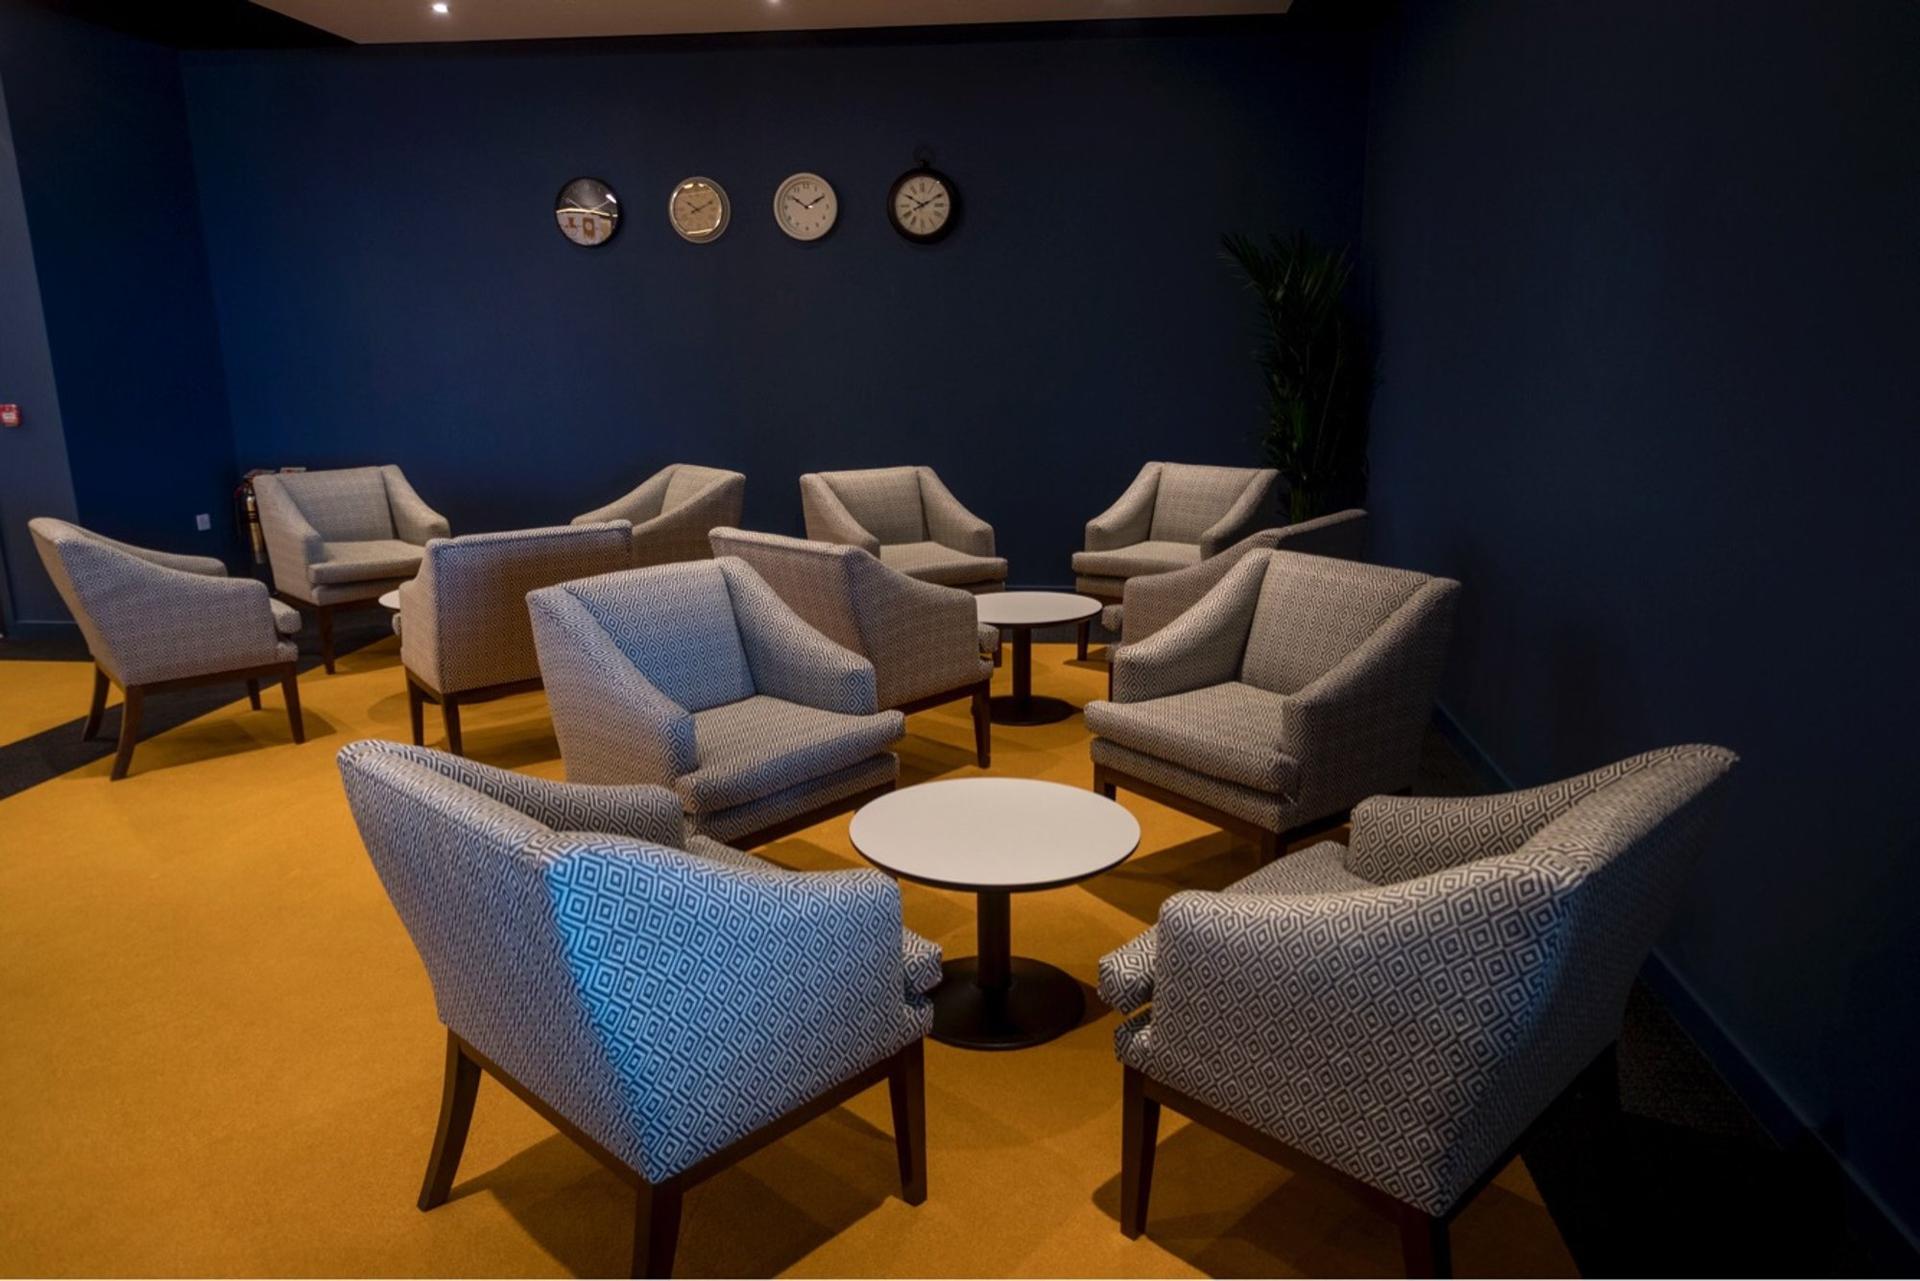 Northern Lights Executive Lounge image 3 of 10